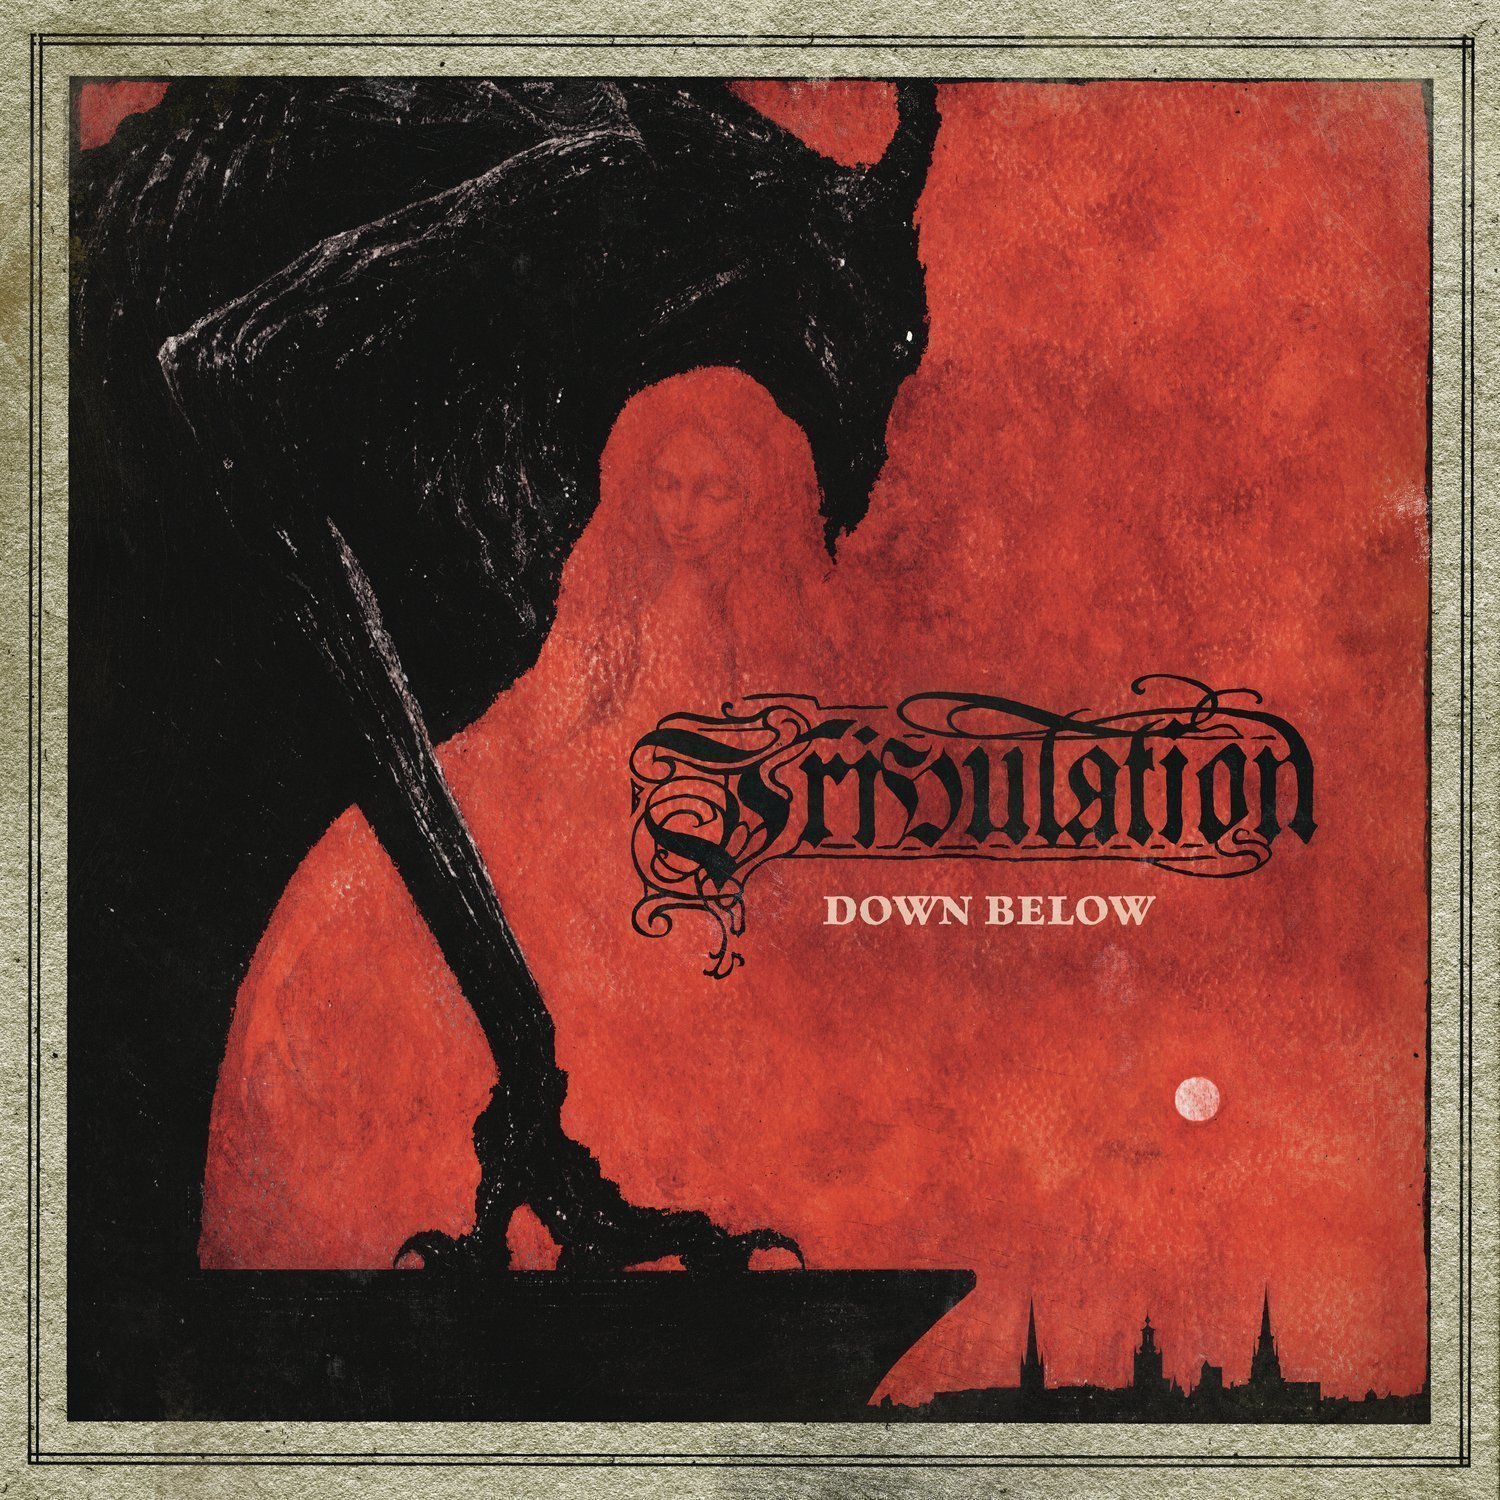 LP Tribulation Down Below (Gatefold Sleeve) (Vinyl LP)